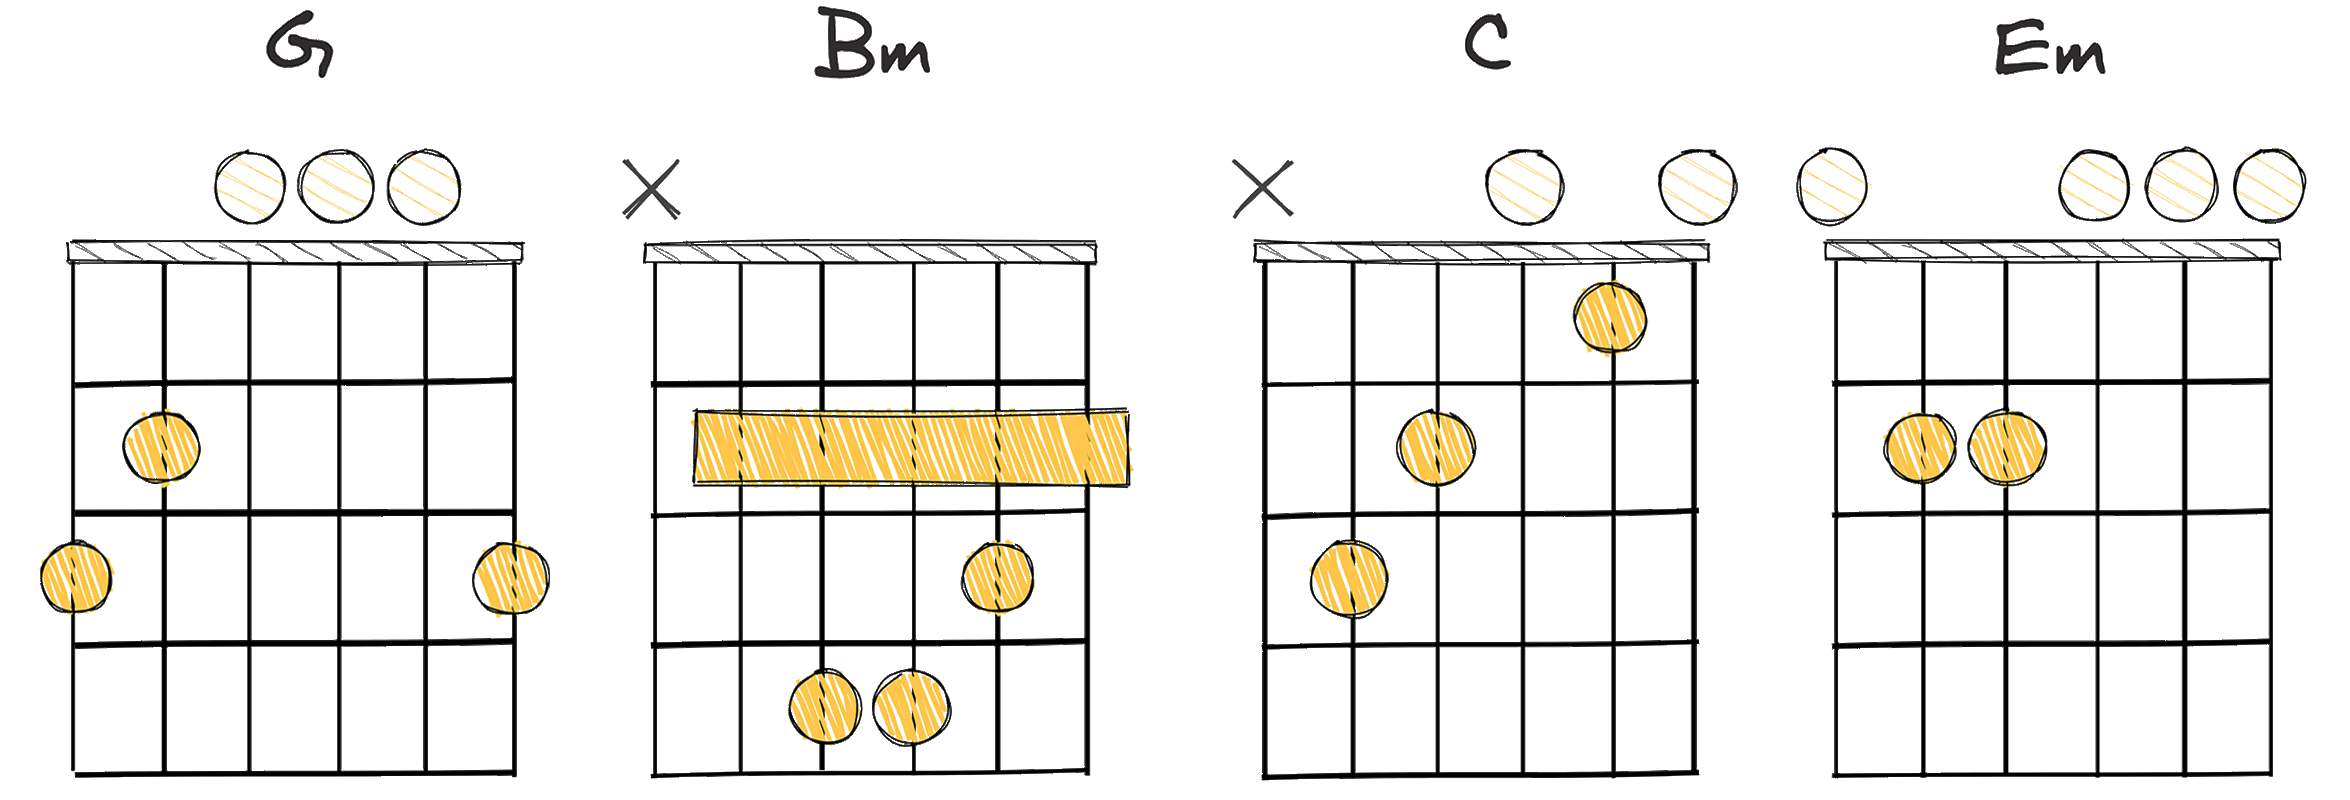 I-iii-IV-vi (1-3-4-6) chords diagram